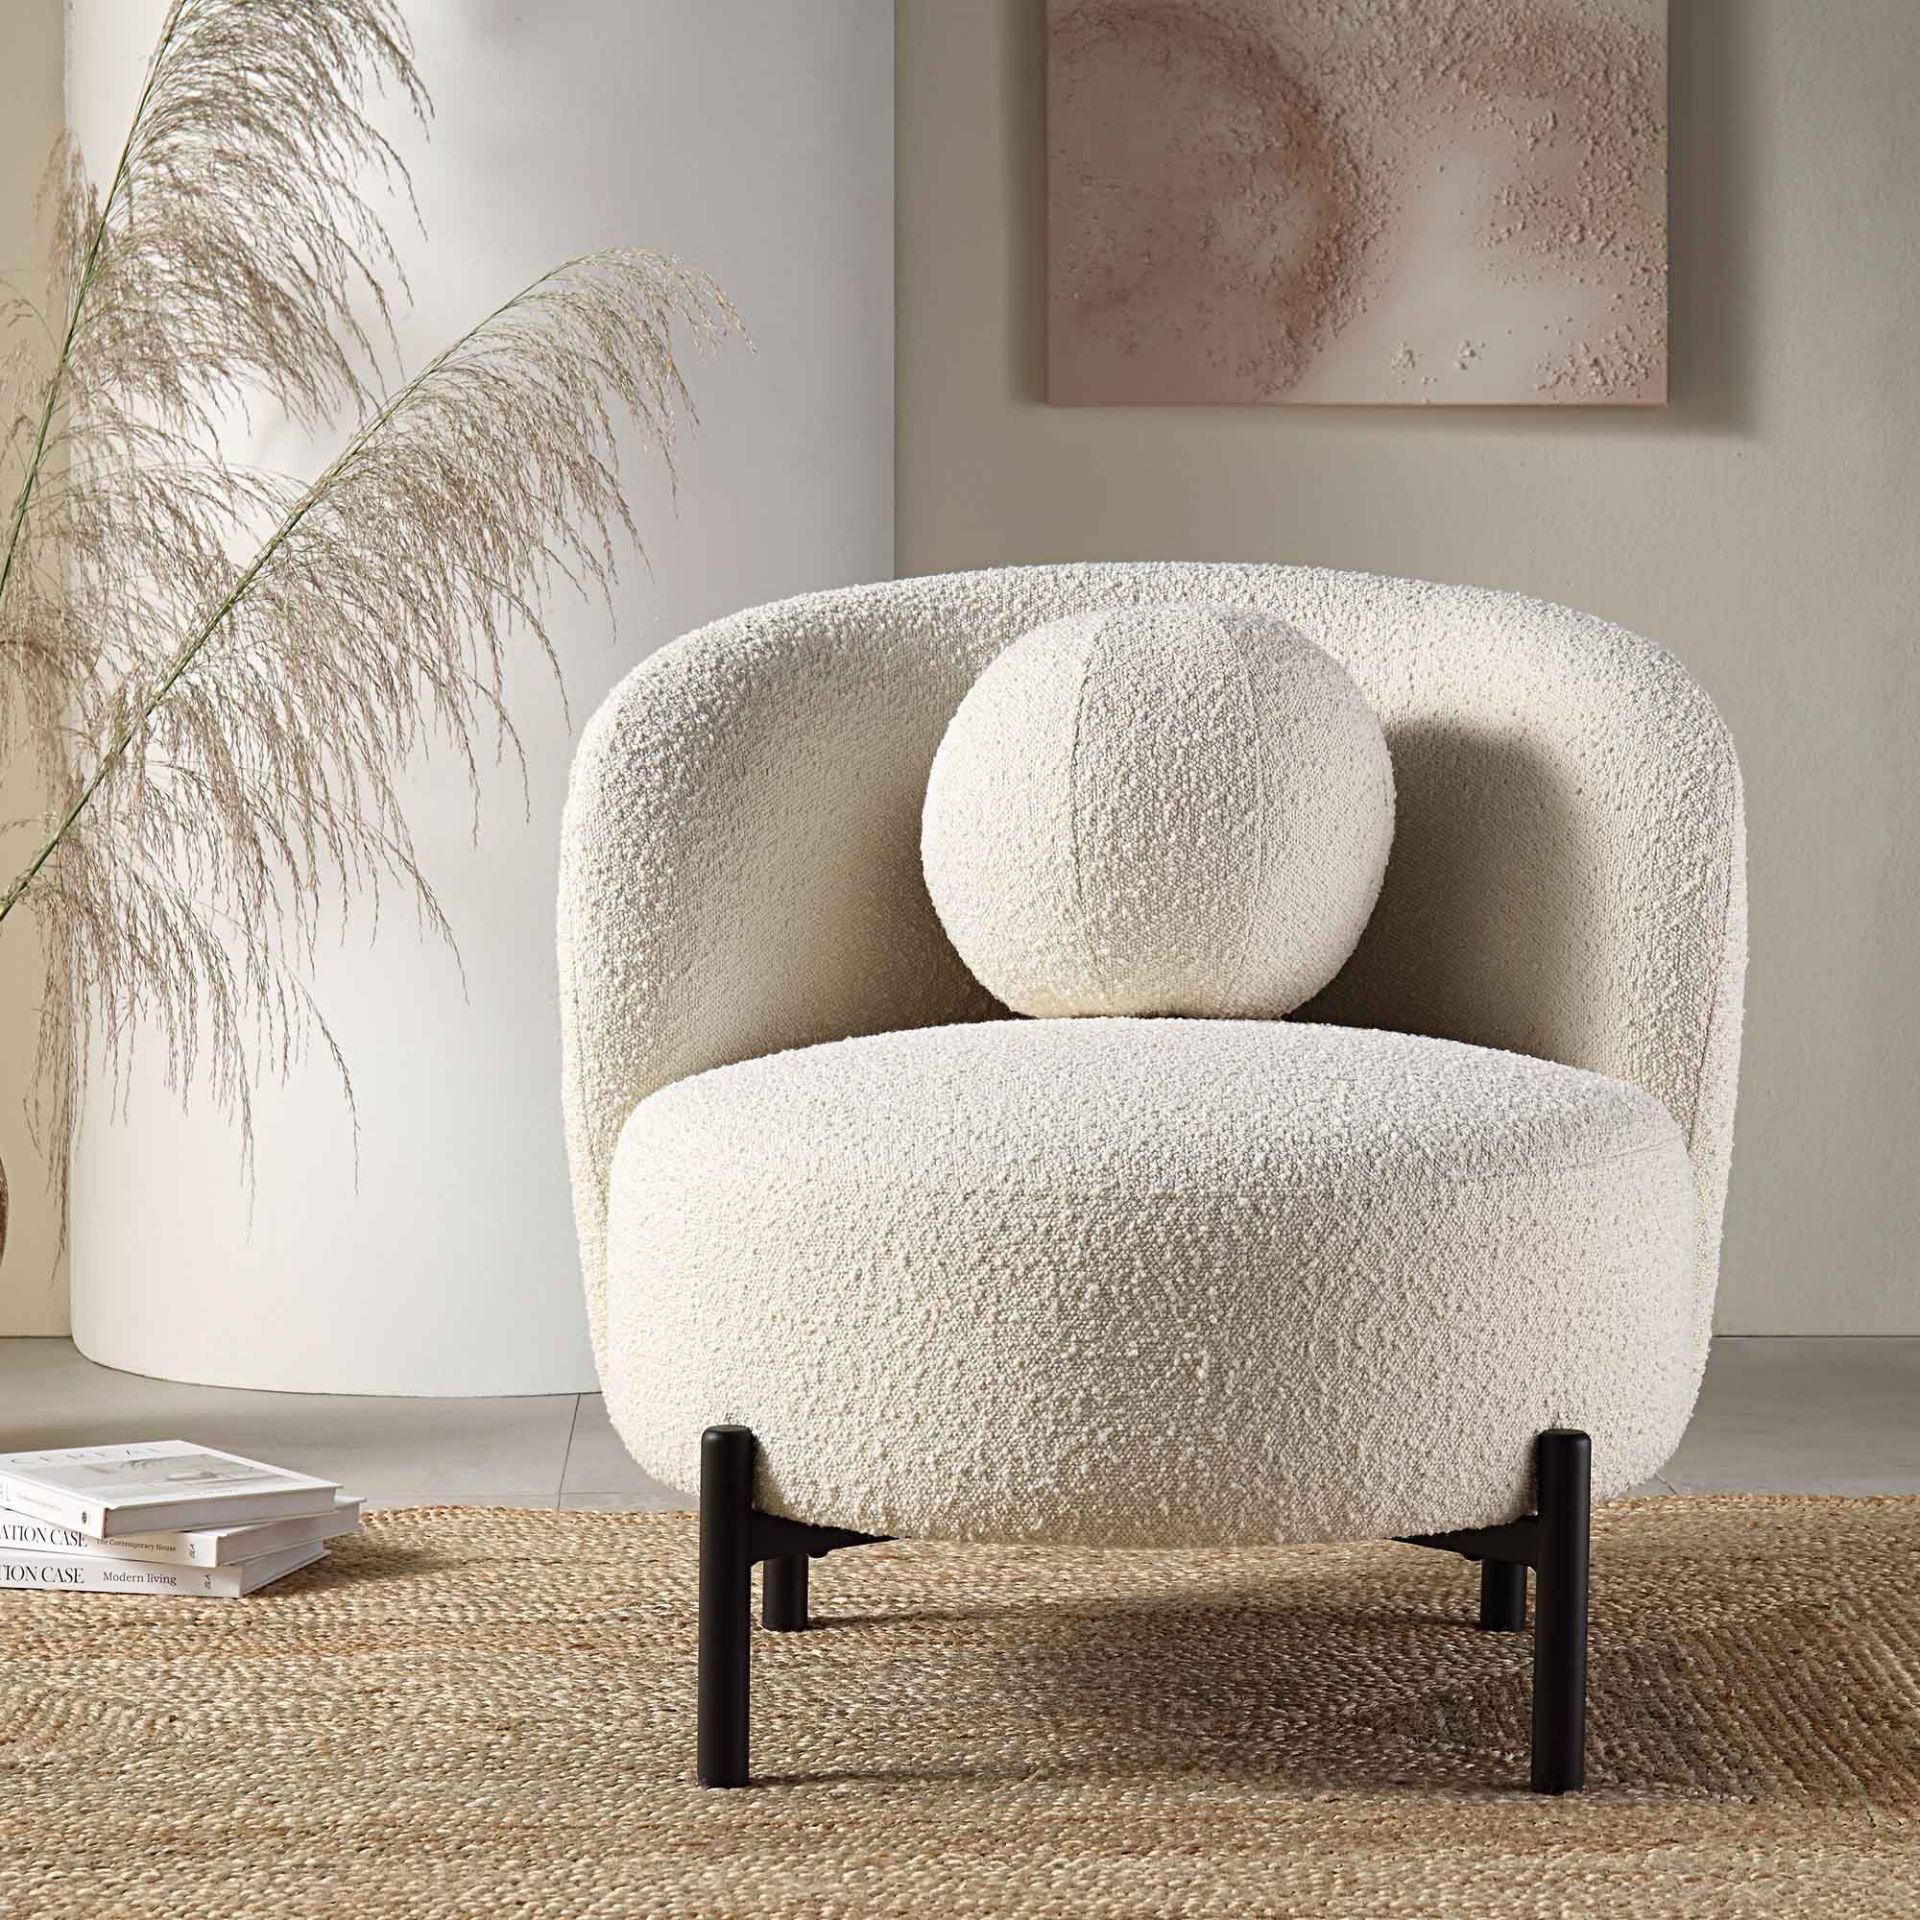 Amboise Armchair with Ball Cushion, Ecru Boucle. - R19.6. RRP £329.99. The Amboise armchair embraces